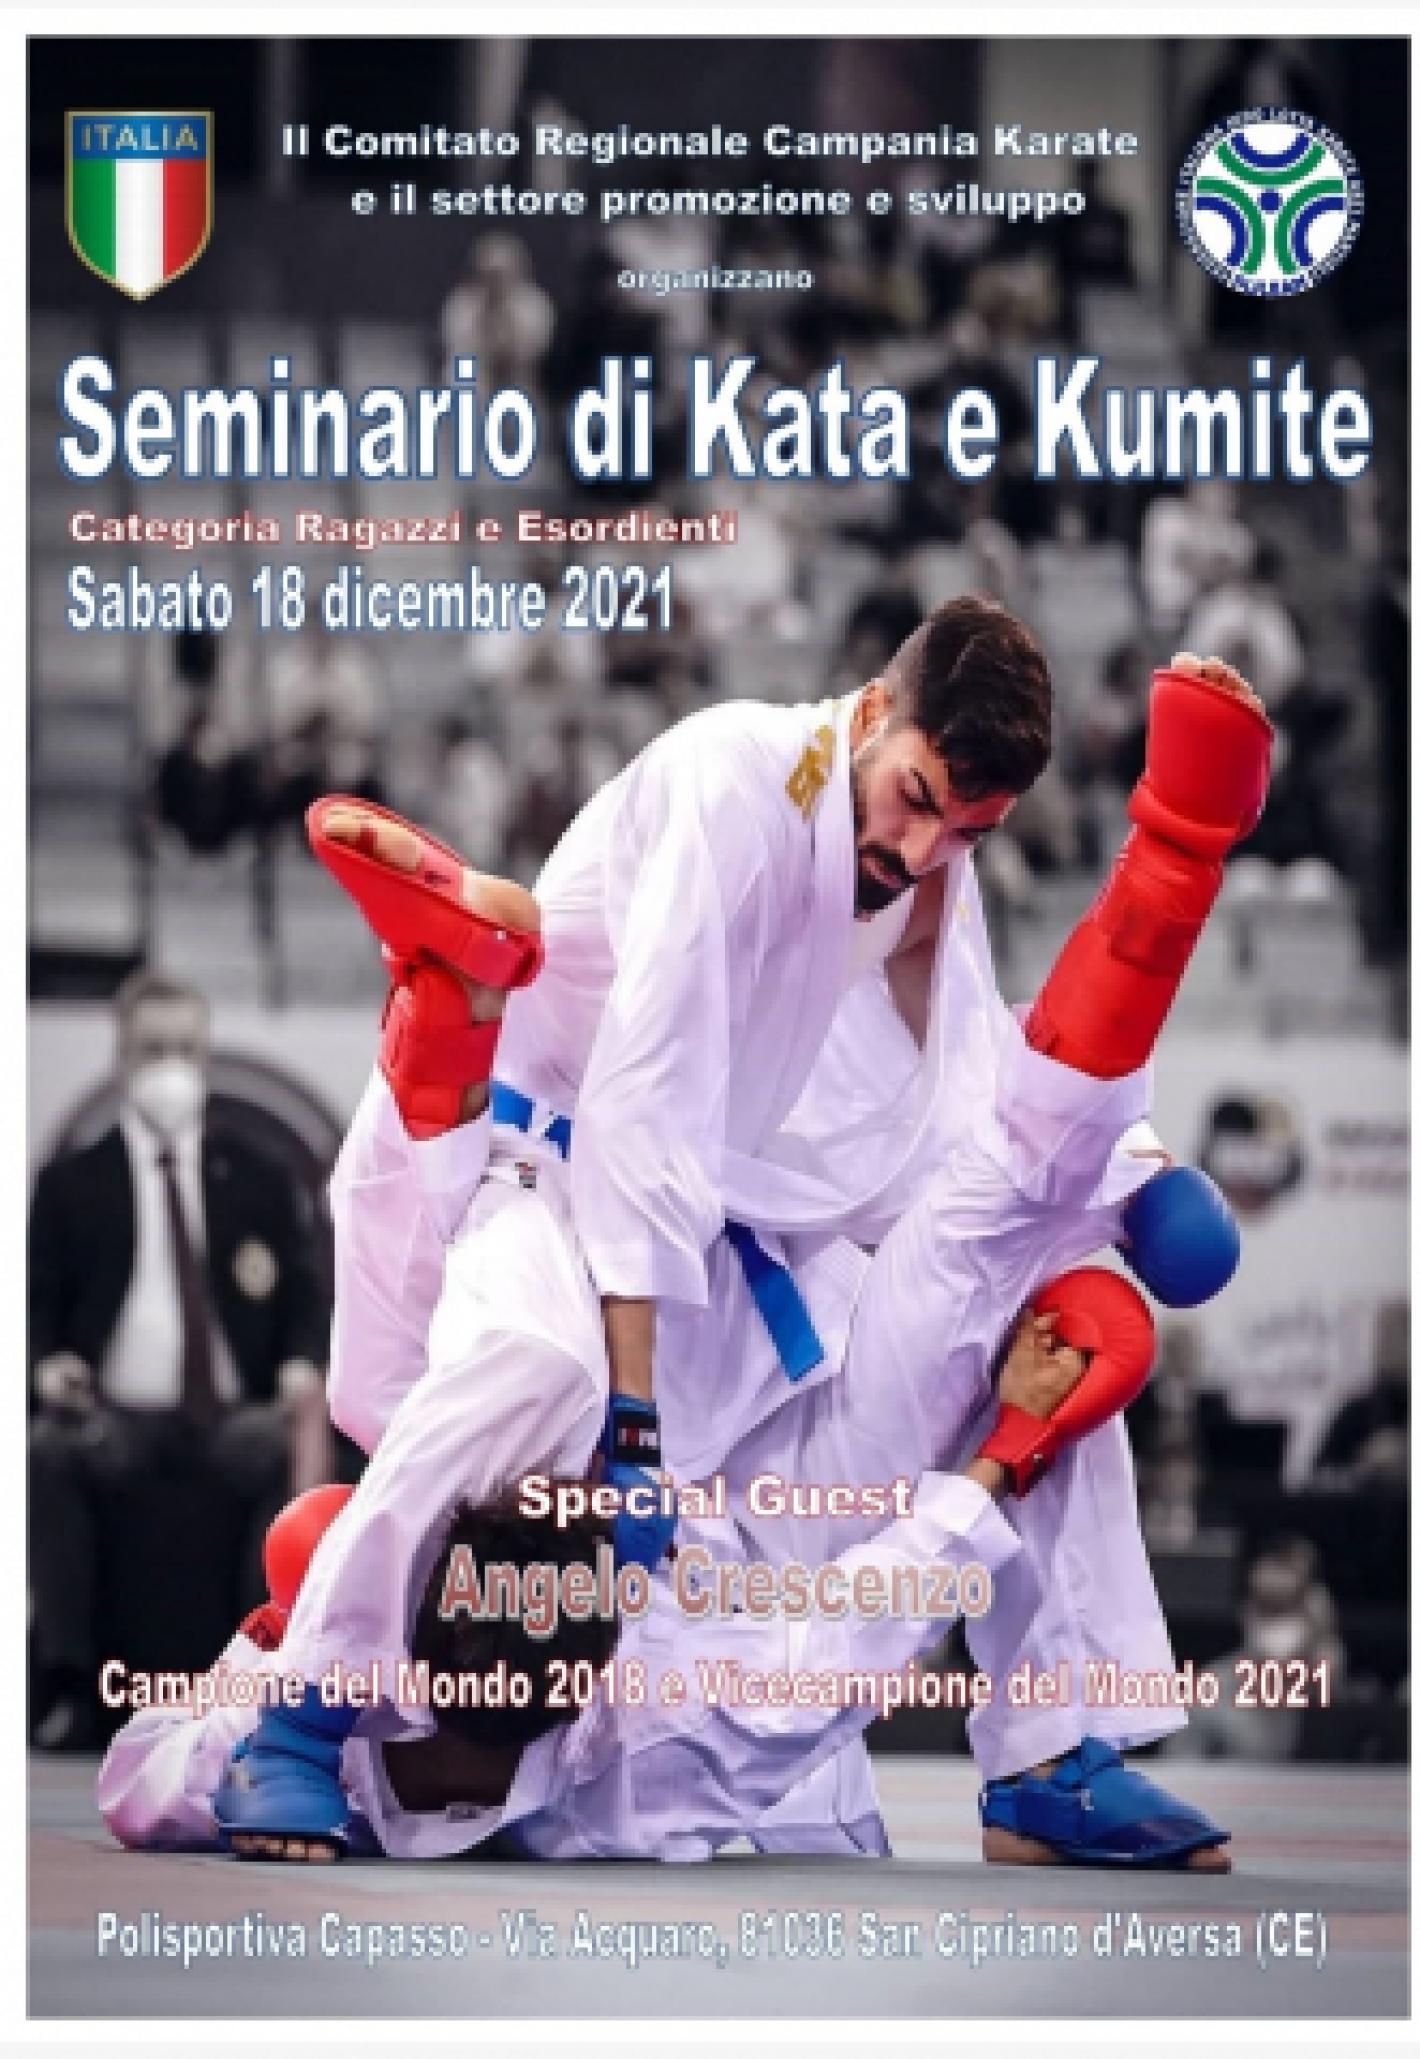 images/campania/comitato2021/karate2021/stage/medium/WhatsApp_Image_2021-12-18_at_09.48.21.jpeg